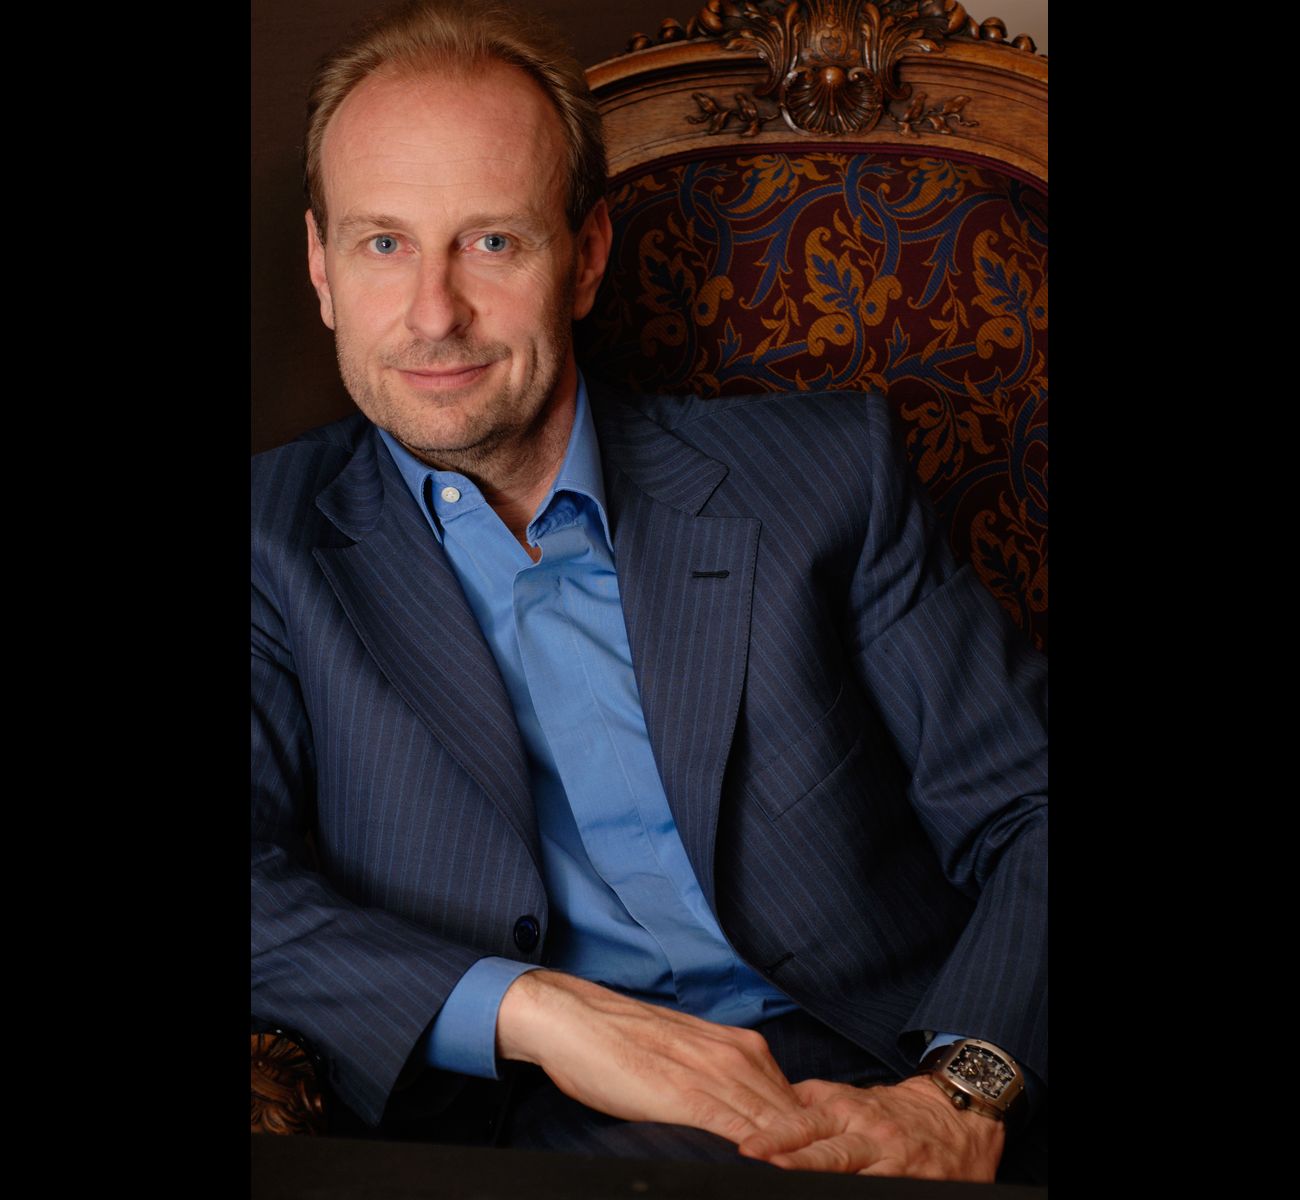 Yves Bouvier, president and owner